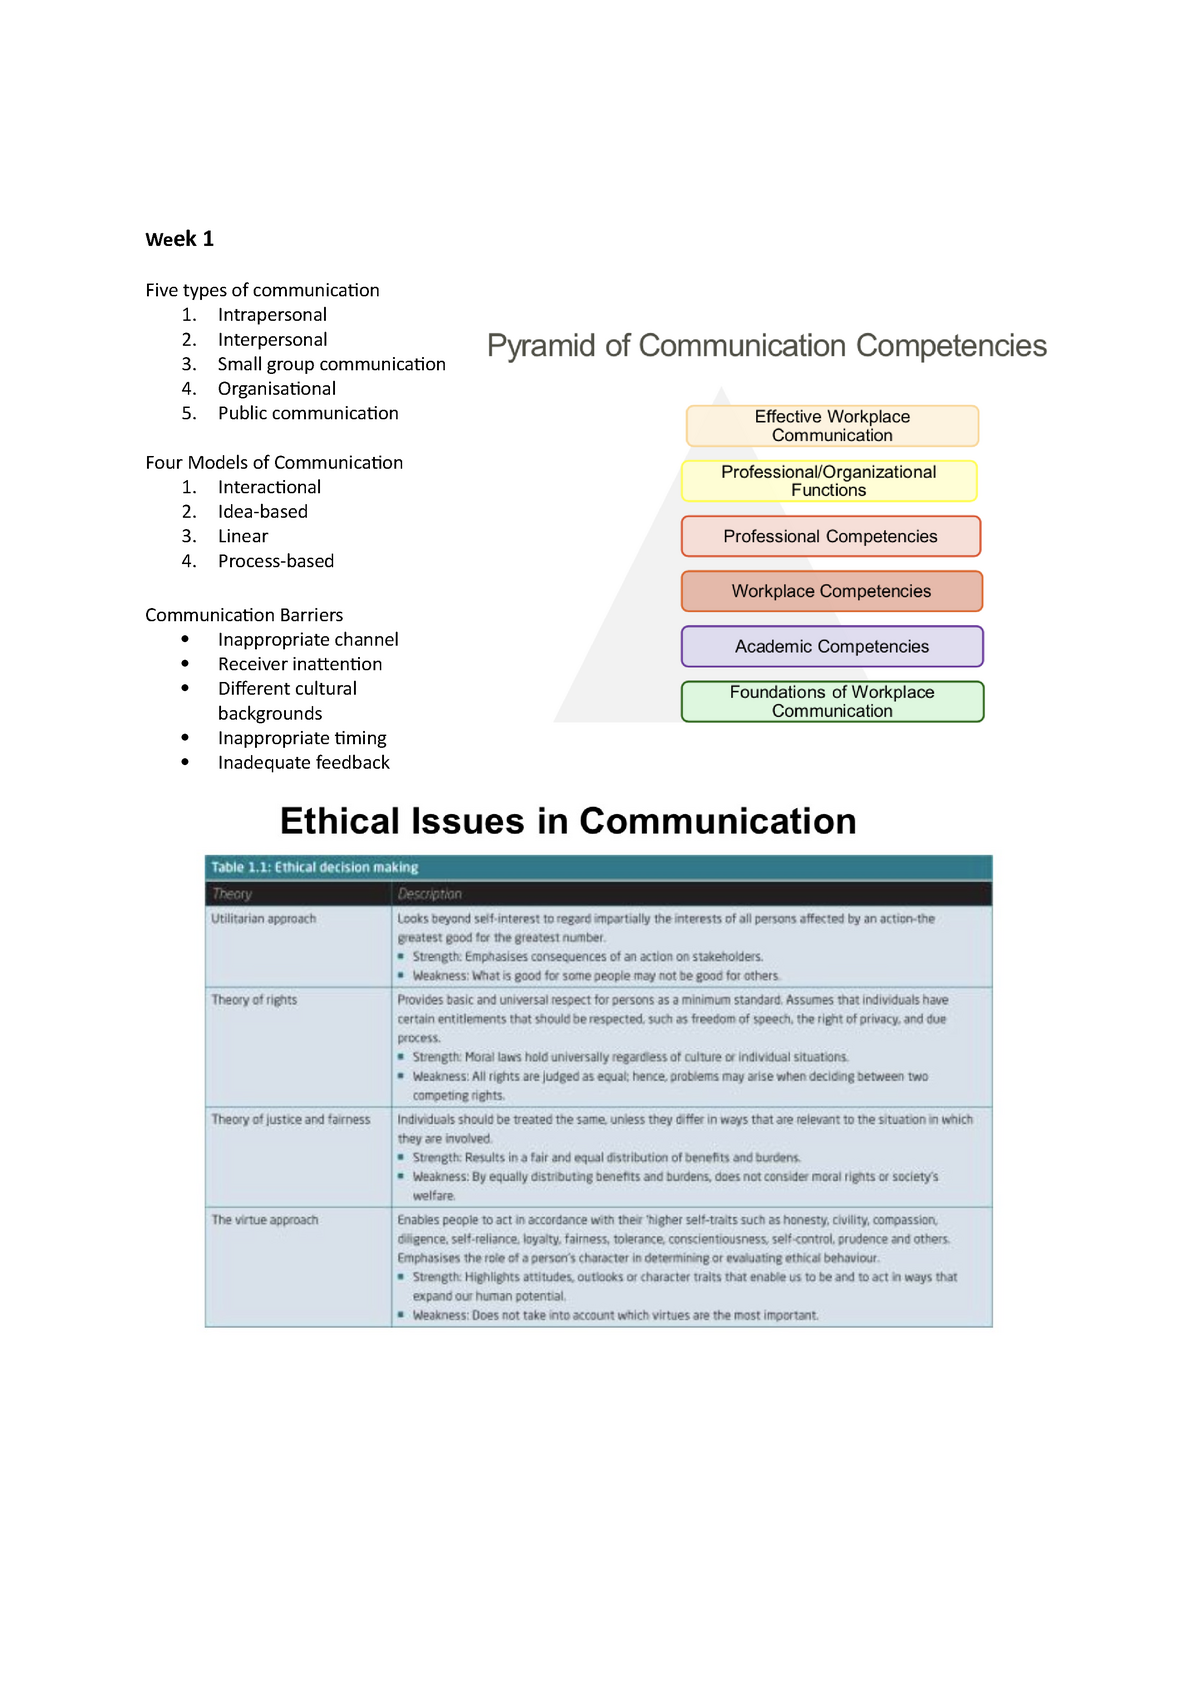 benefits of intrapersonal communication